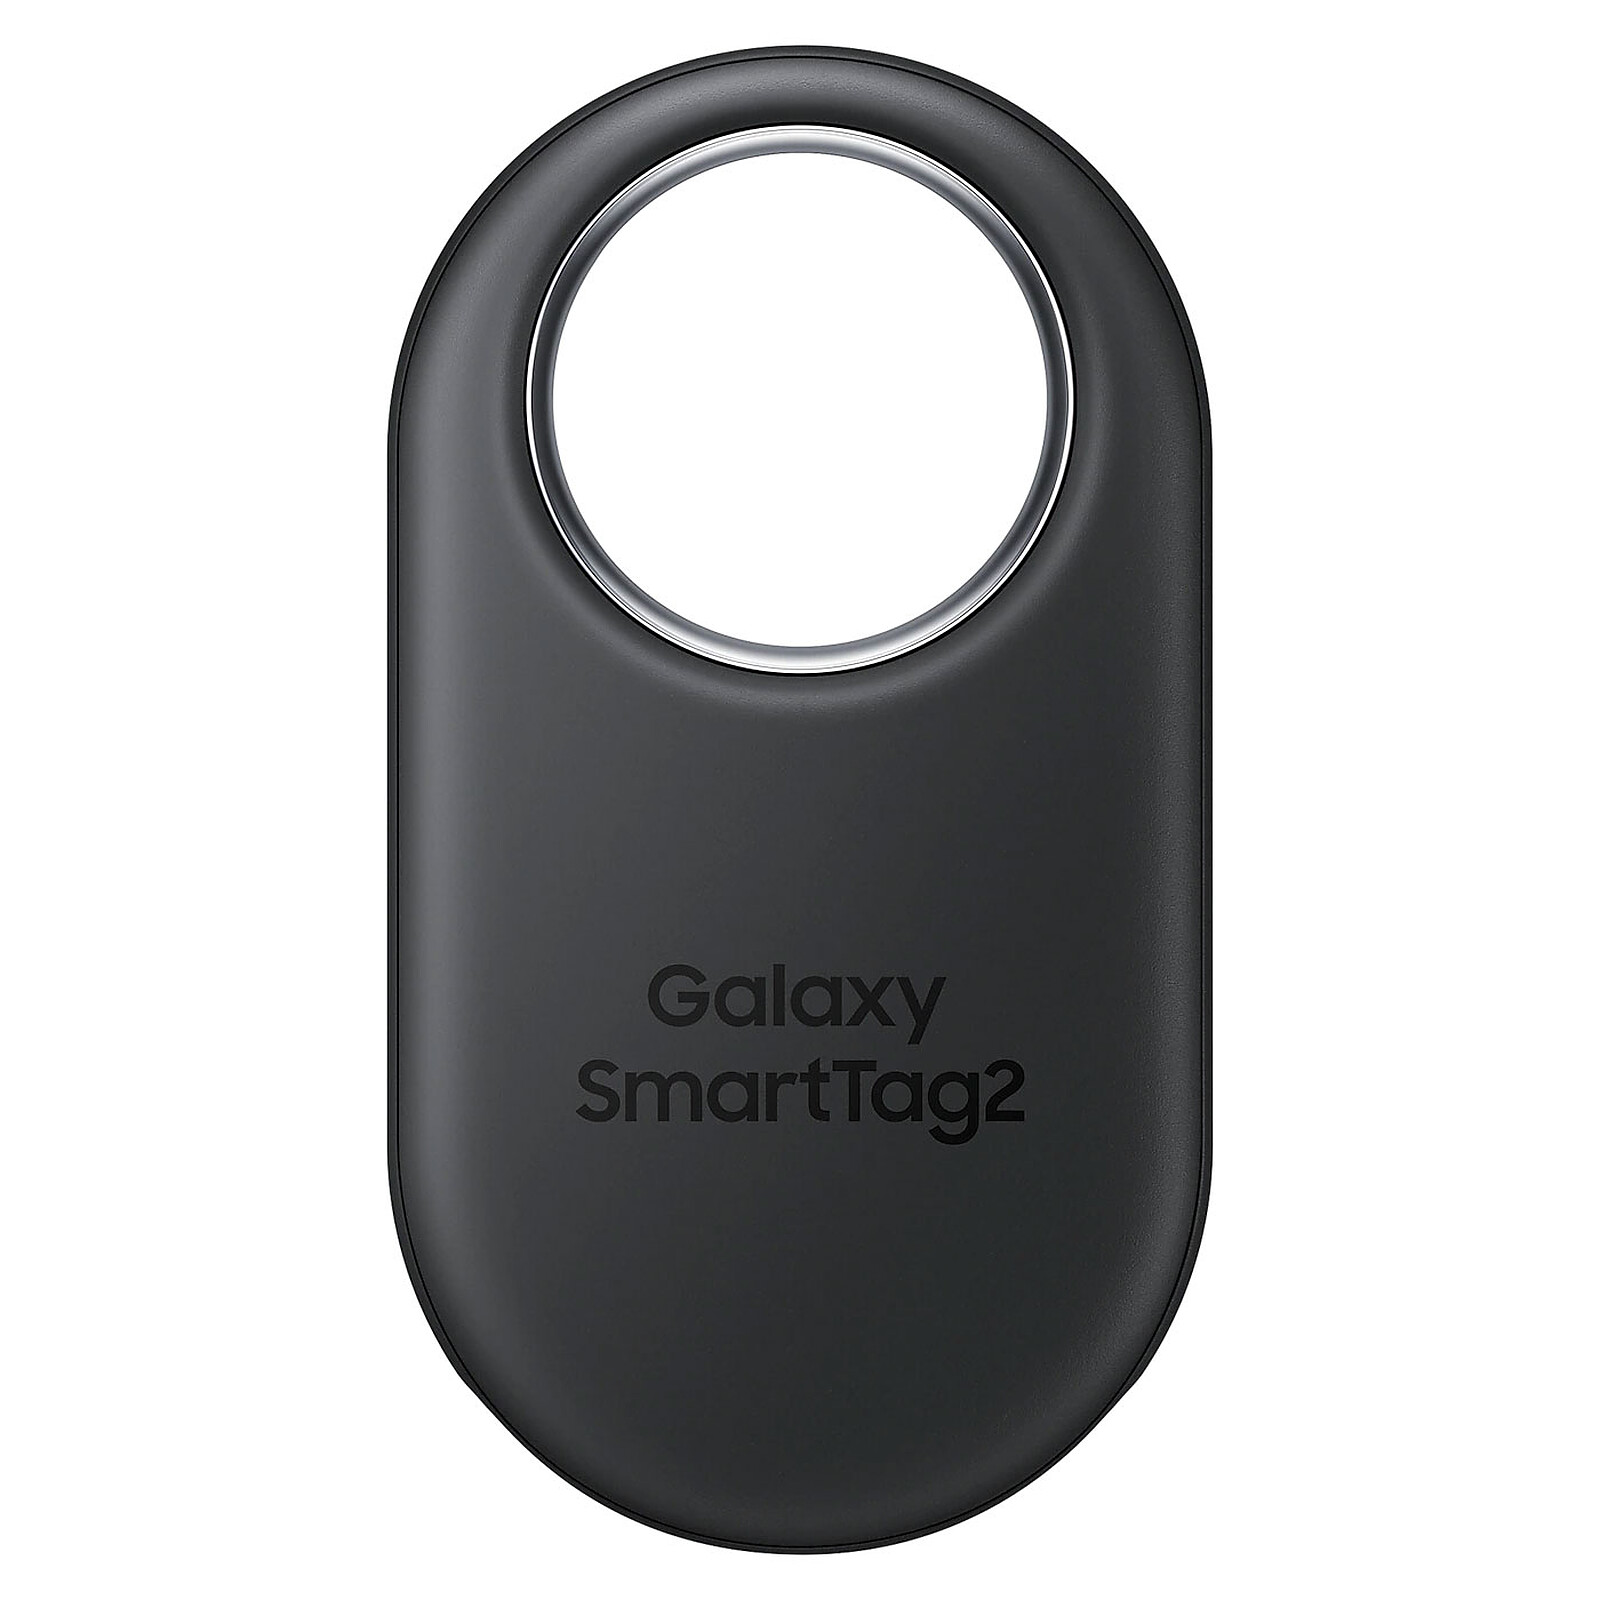 Samsung Galaxy SmartTag2 Nero - Smart tracker - Garanzia 3 anni LDLC